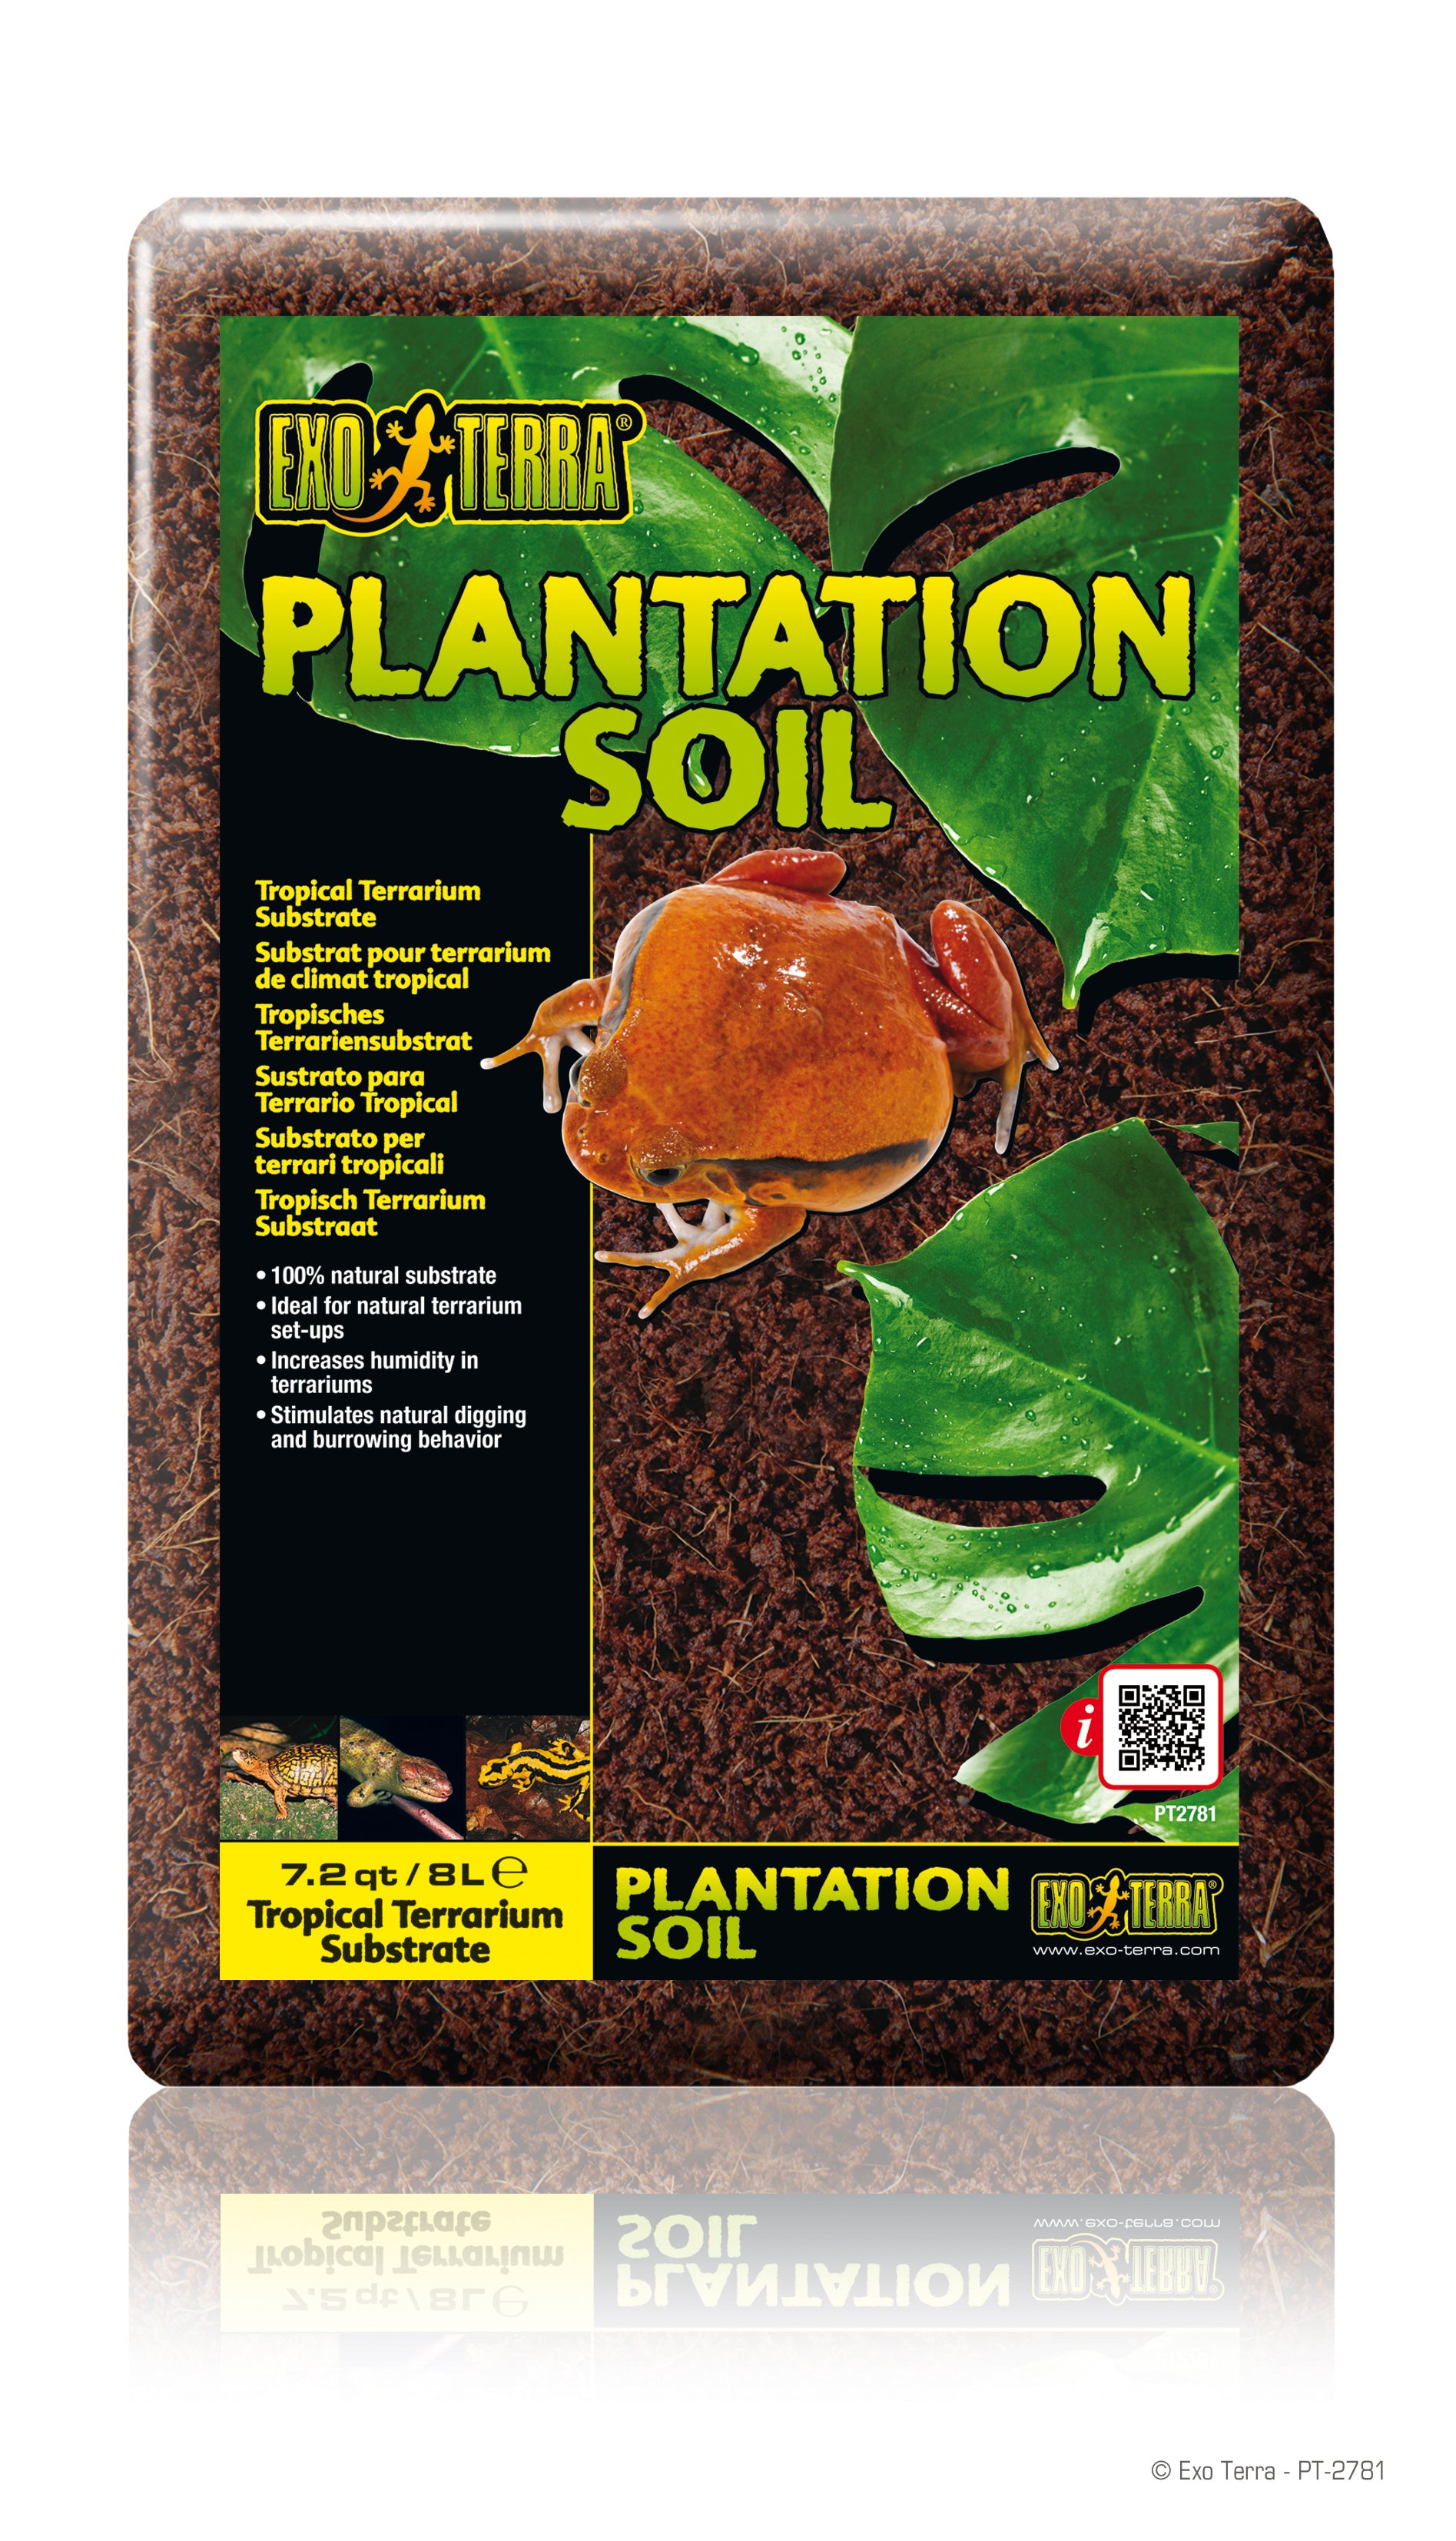 Exo Terra Plantation Soil Bag